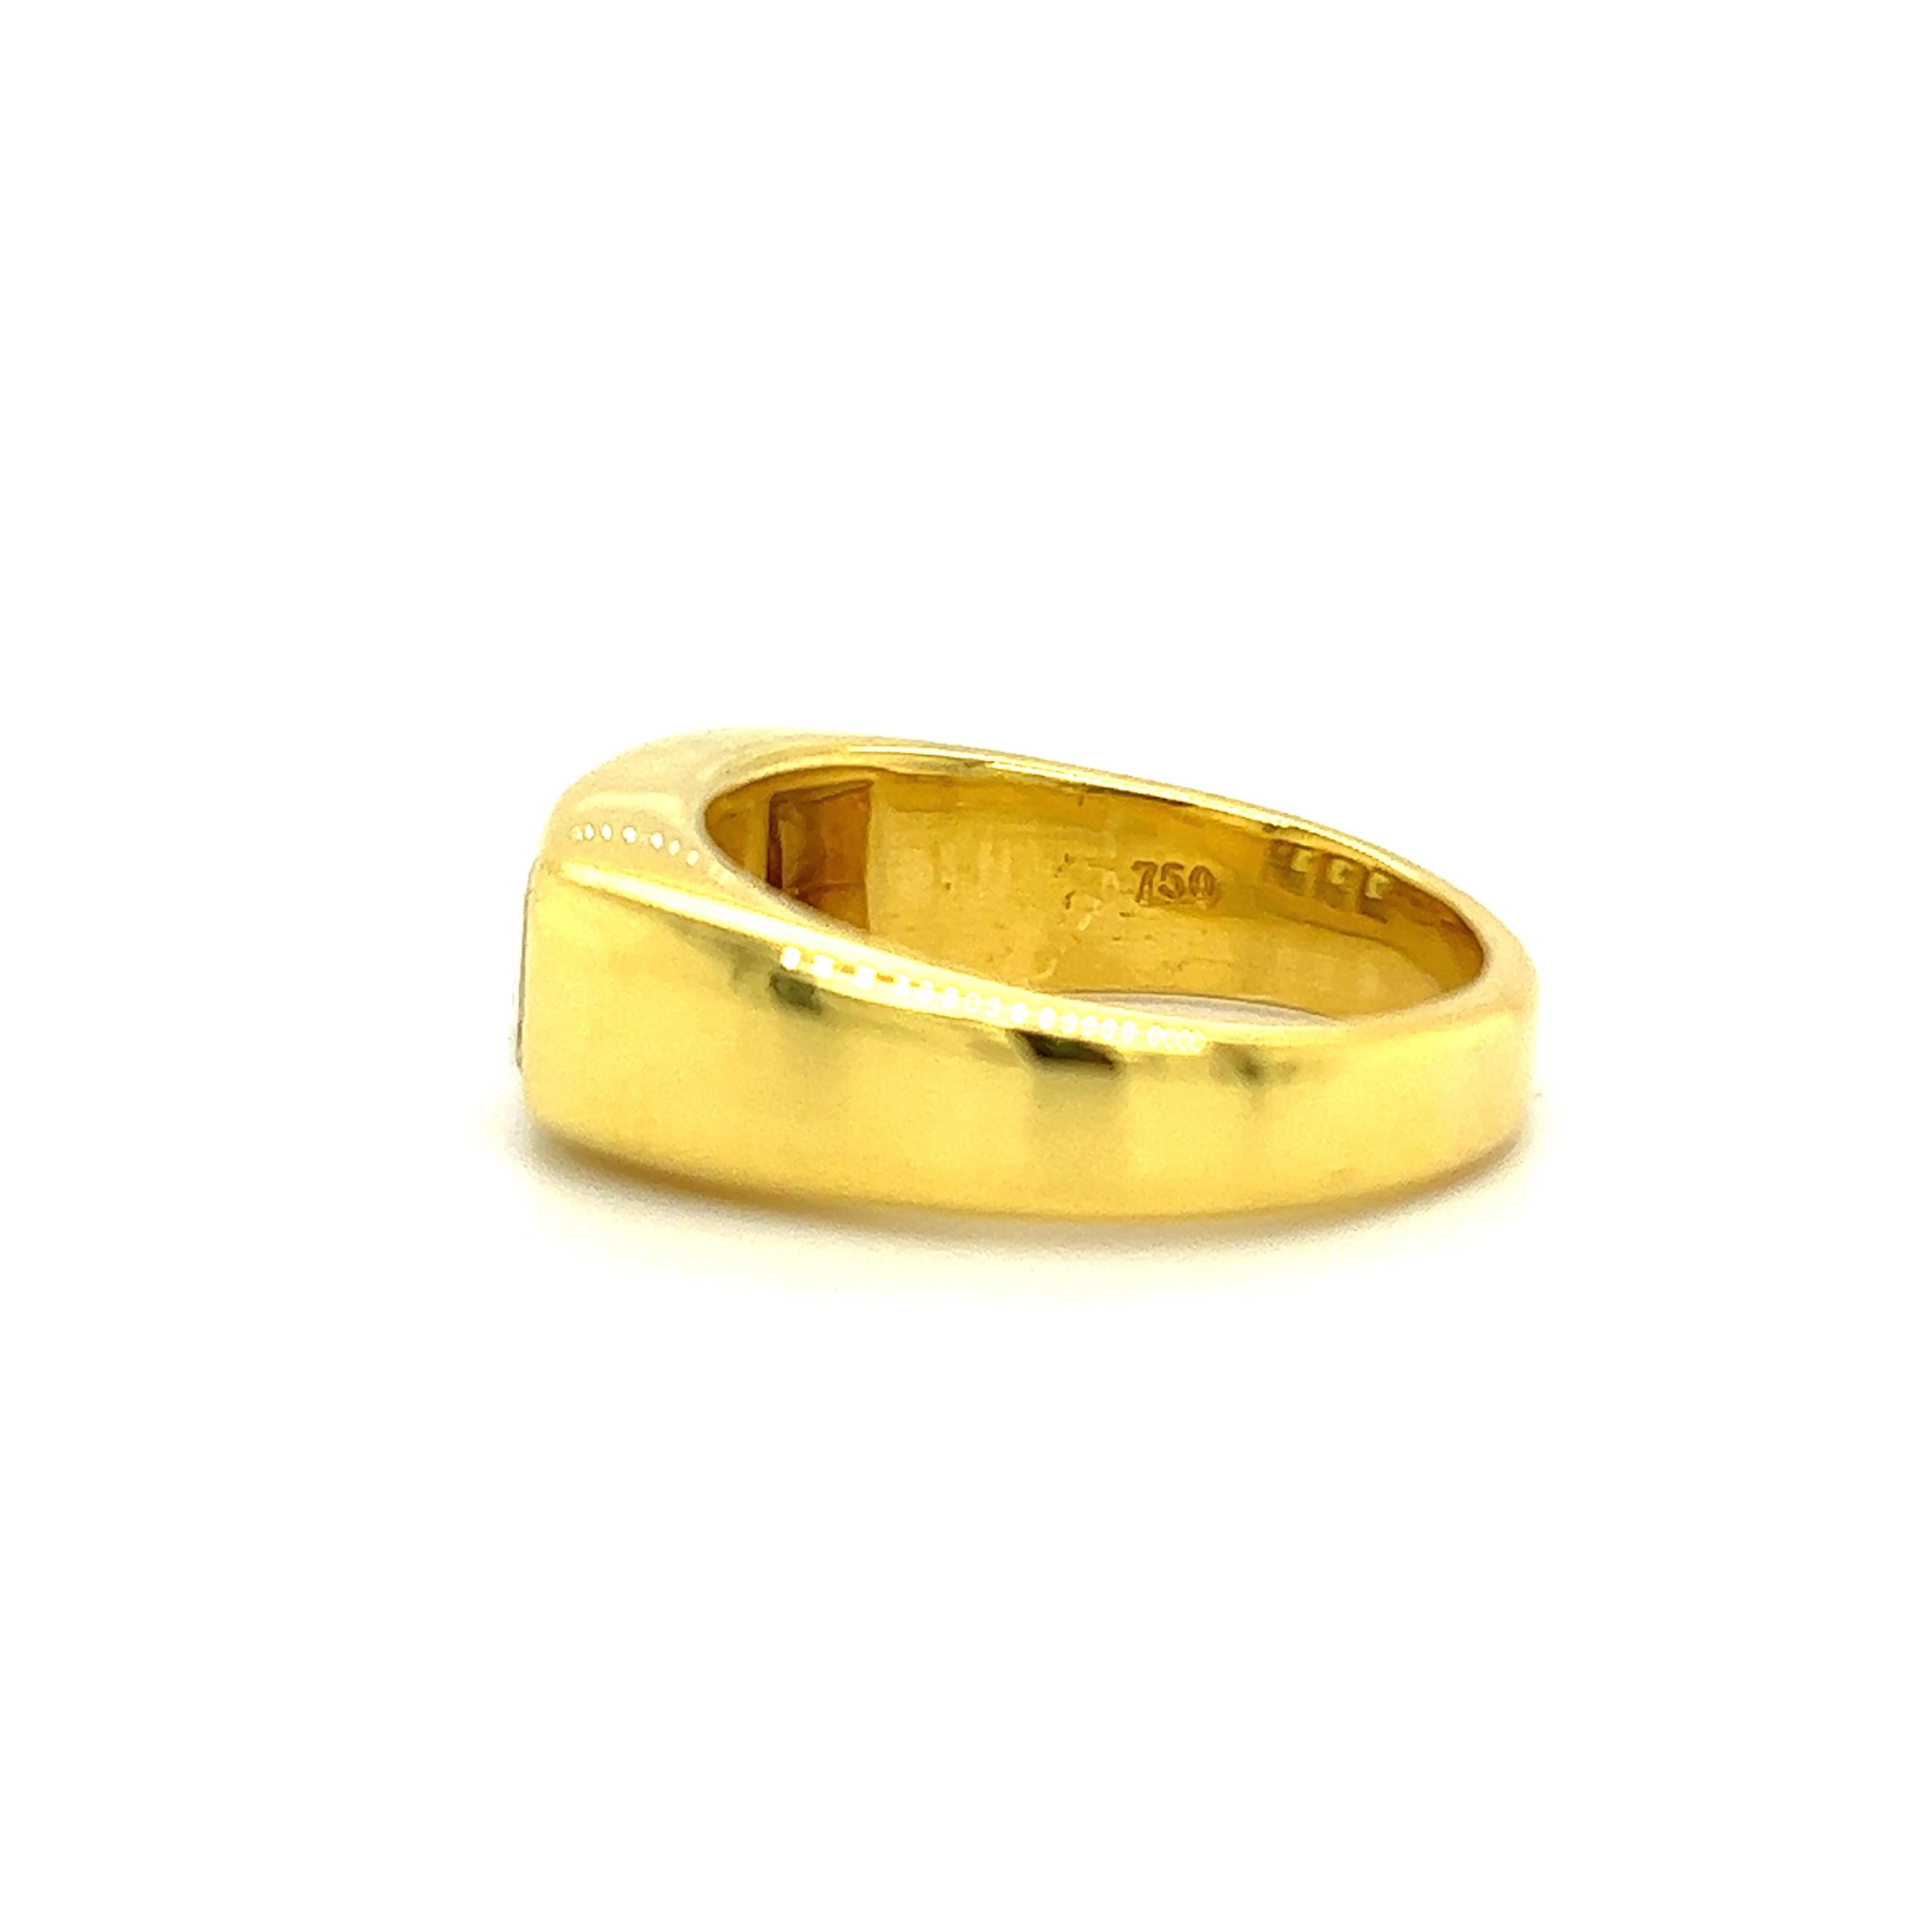 Radiant Cut Estate Men's Fancy Yellow Diamond Ring Size 9.5 18k Yellow Gold 3.00 Carat